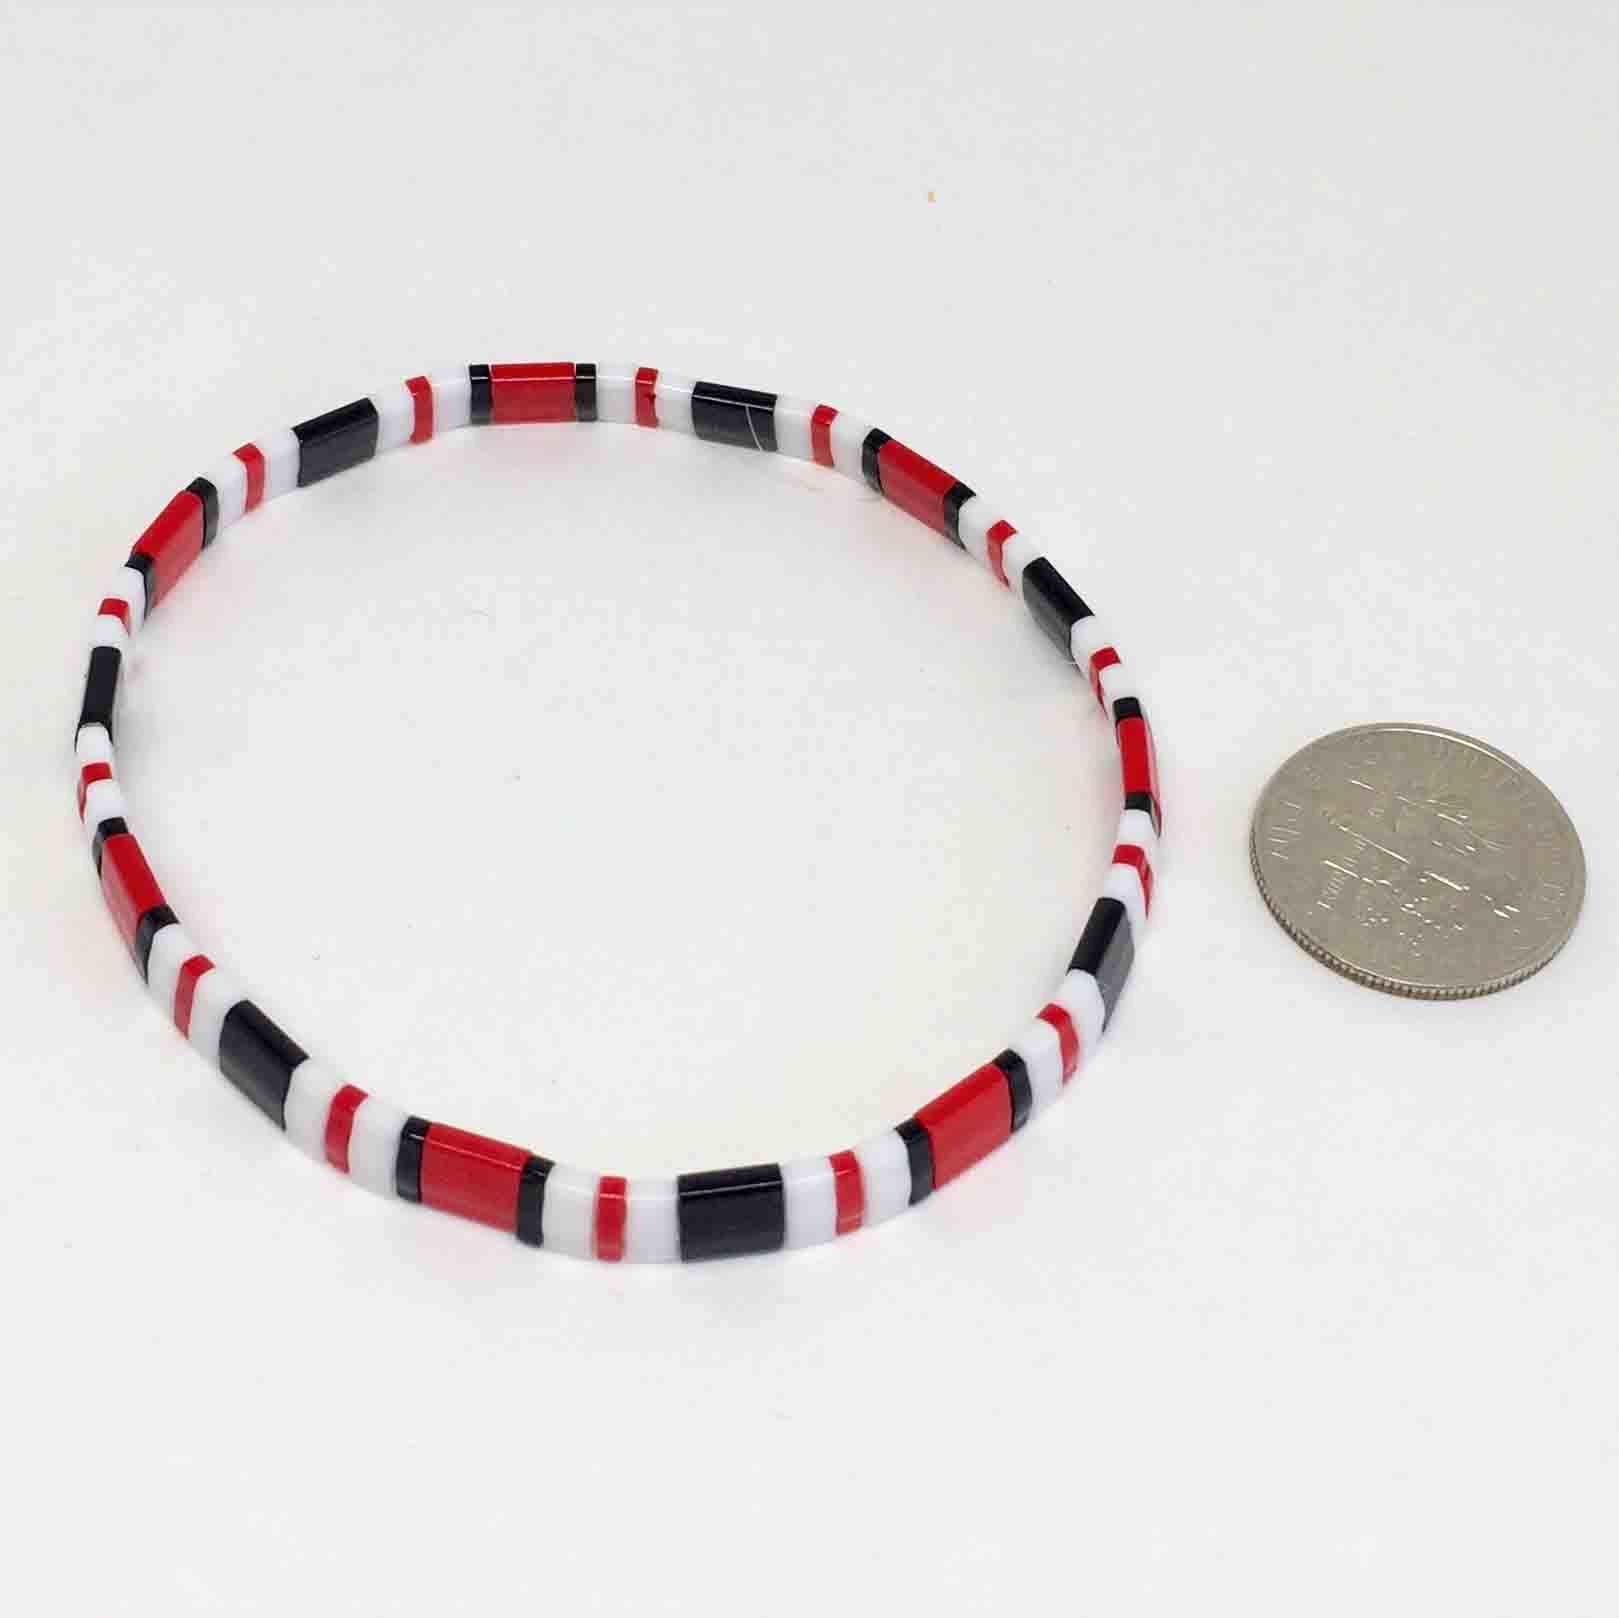 glass bead bracelet black minimalist bracelet best friend gifts Unique black bead bracelet simple jewelry for everyday outfits